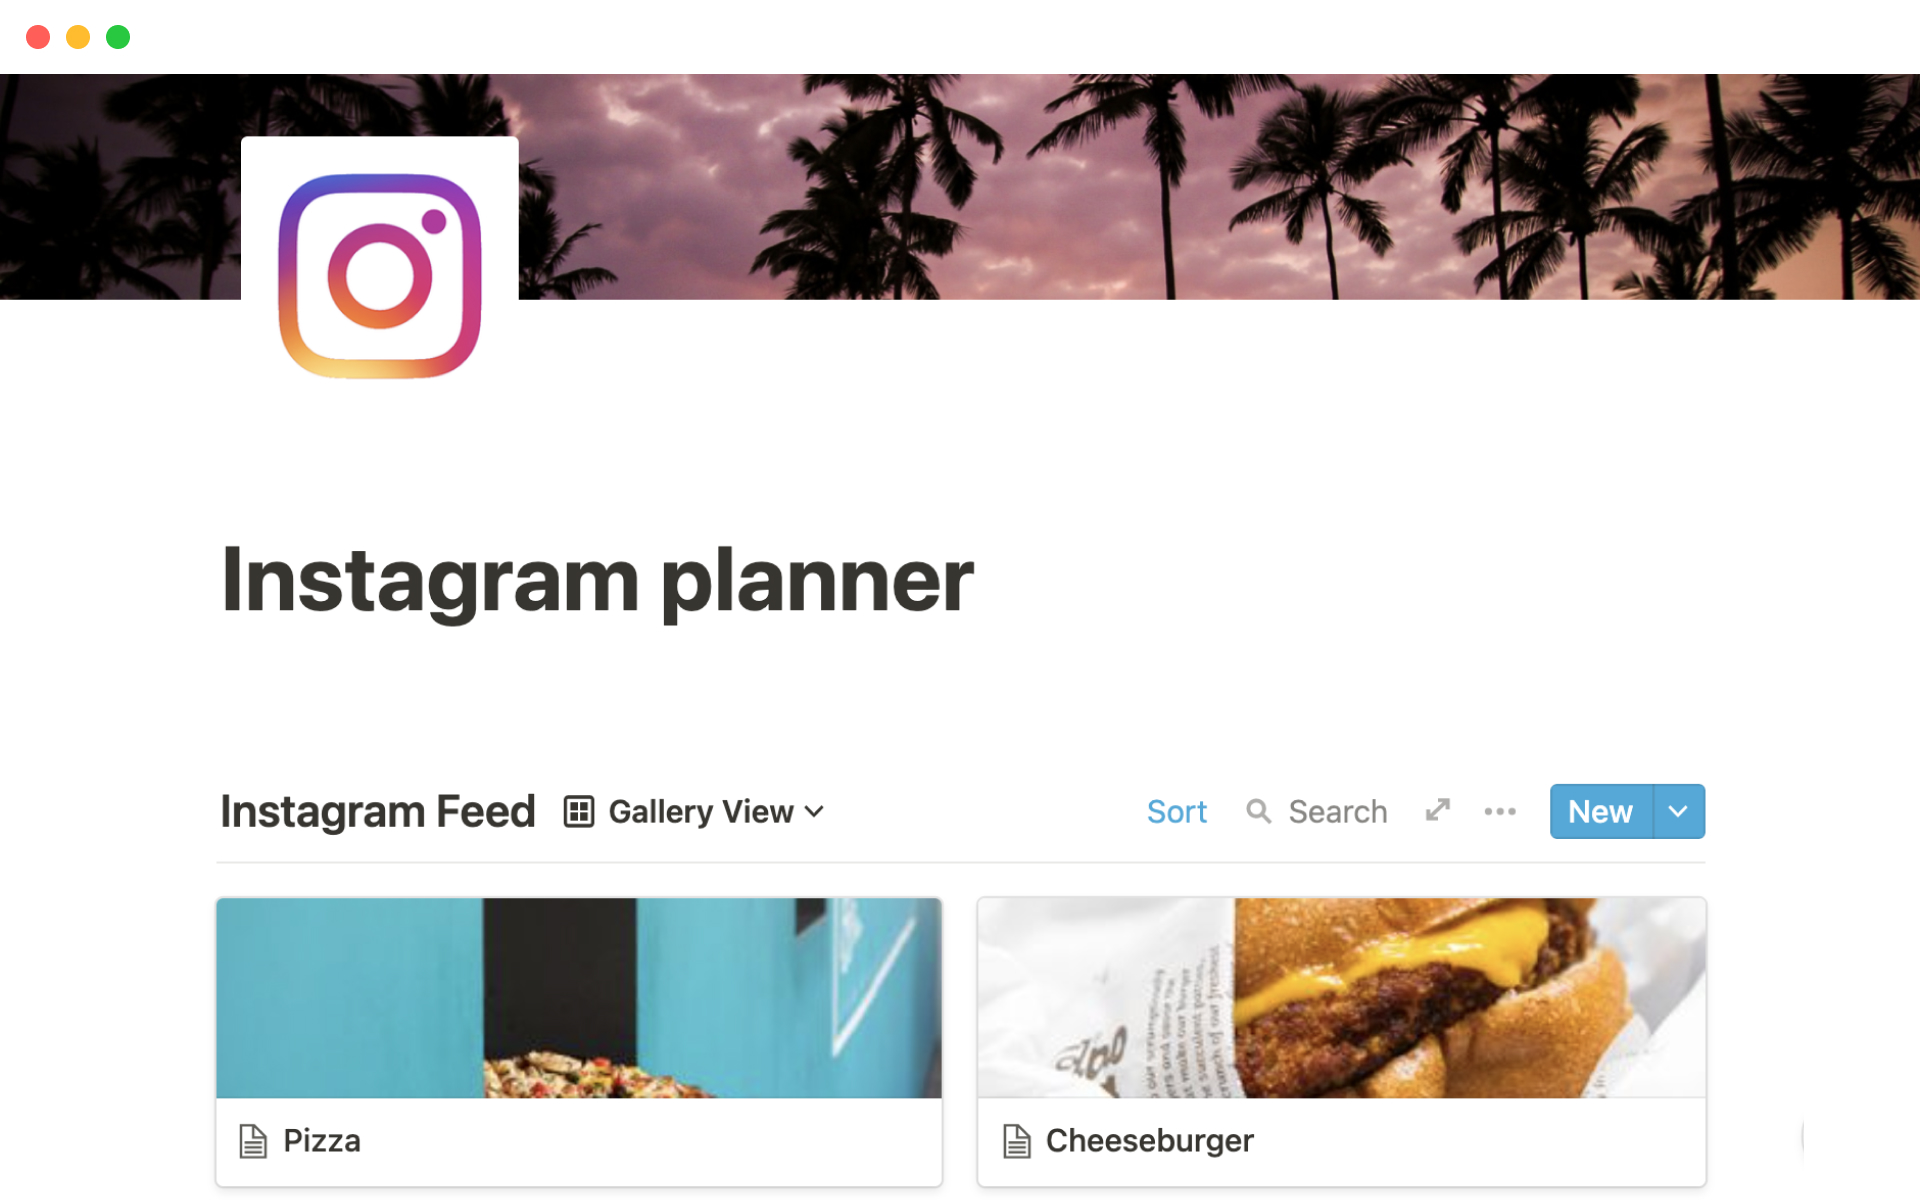 The desktop image for the Instagram planner template